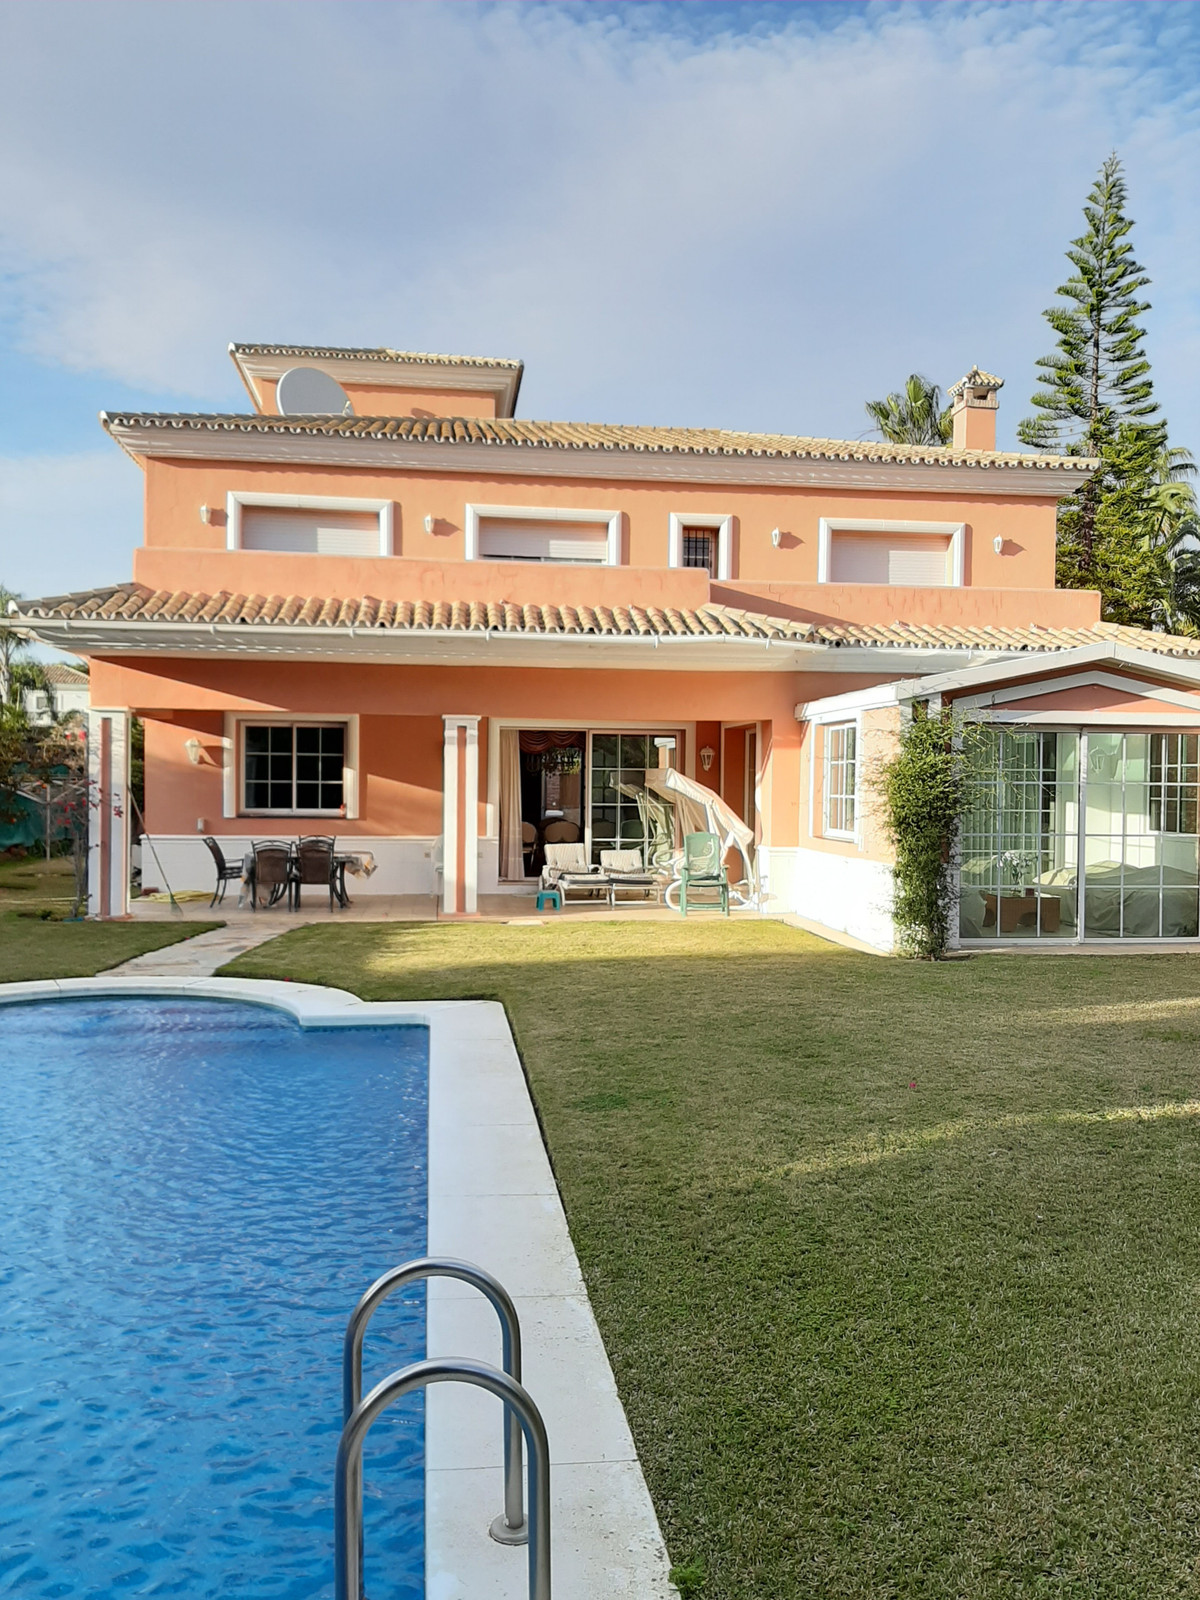 						Villa  Detached
													for sale 
																			 in Estepona
					